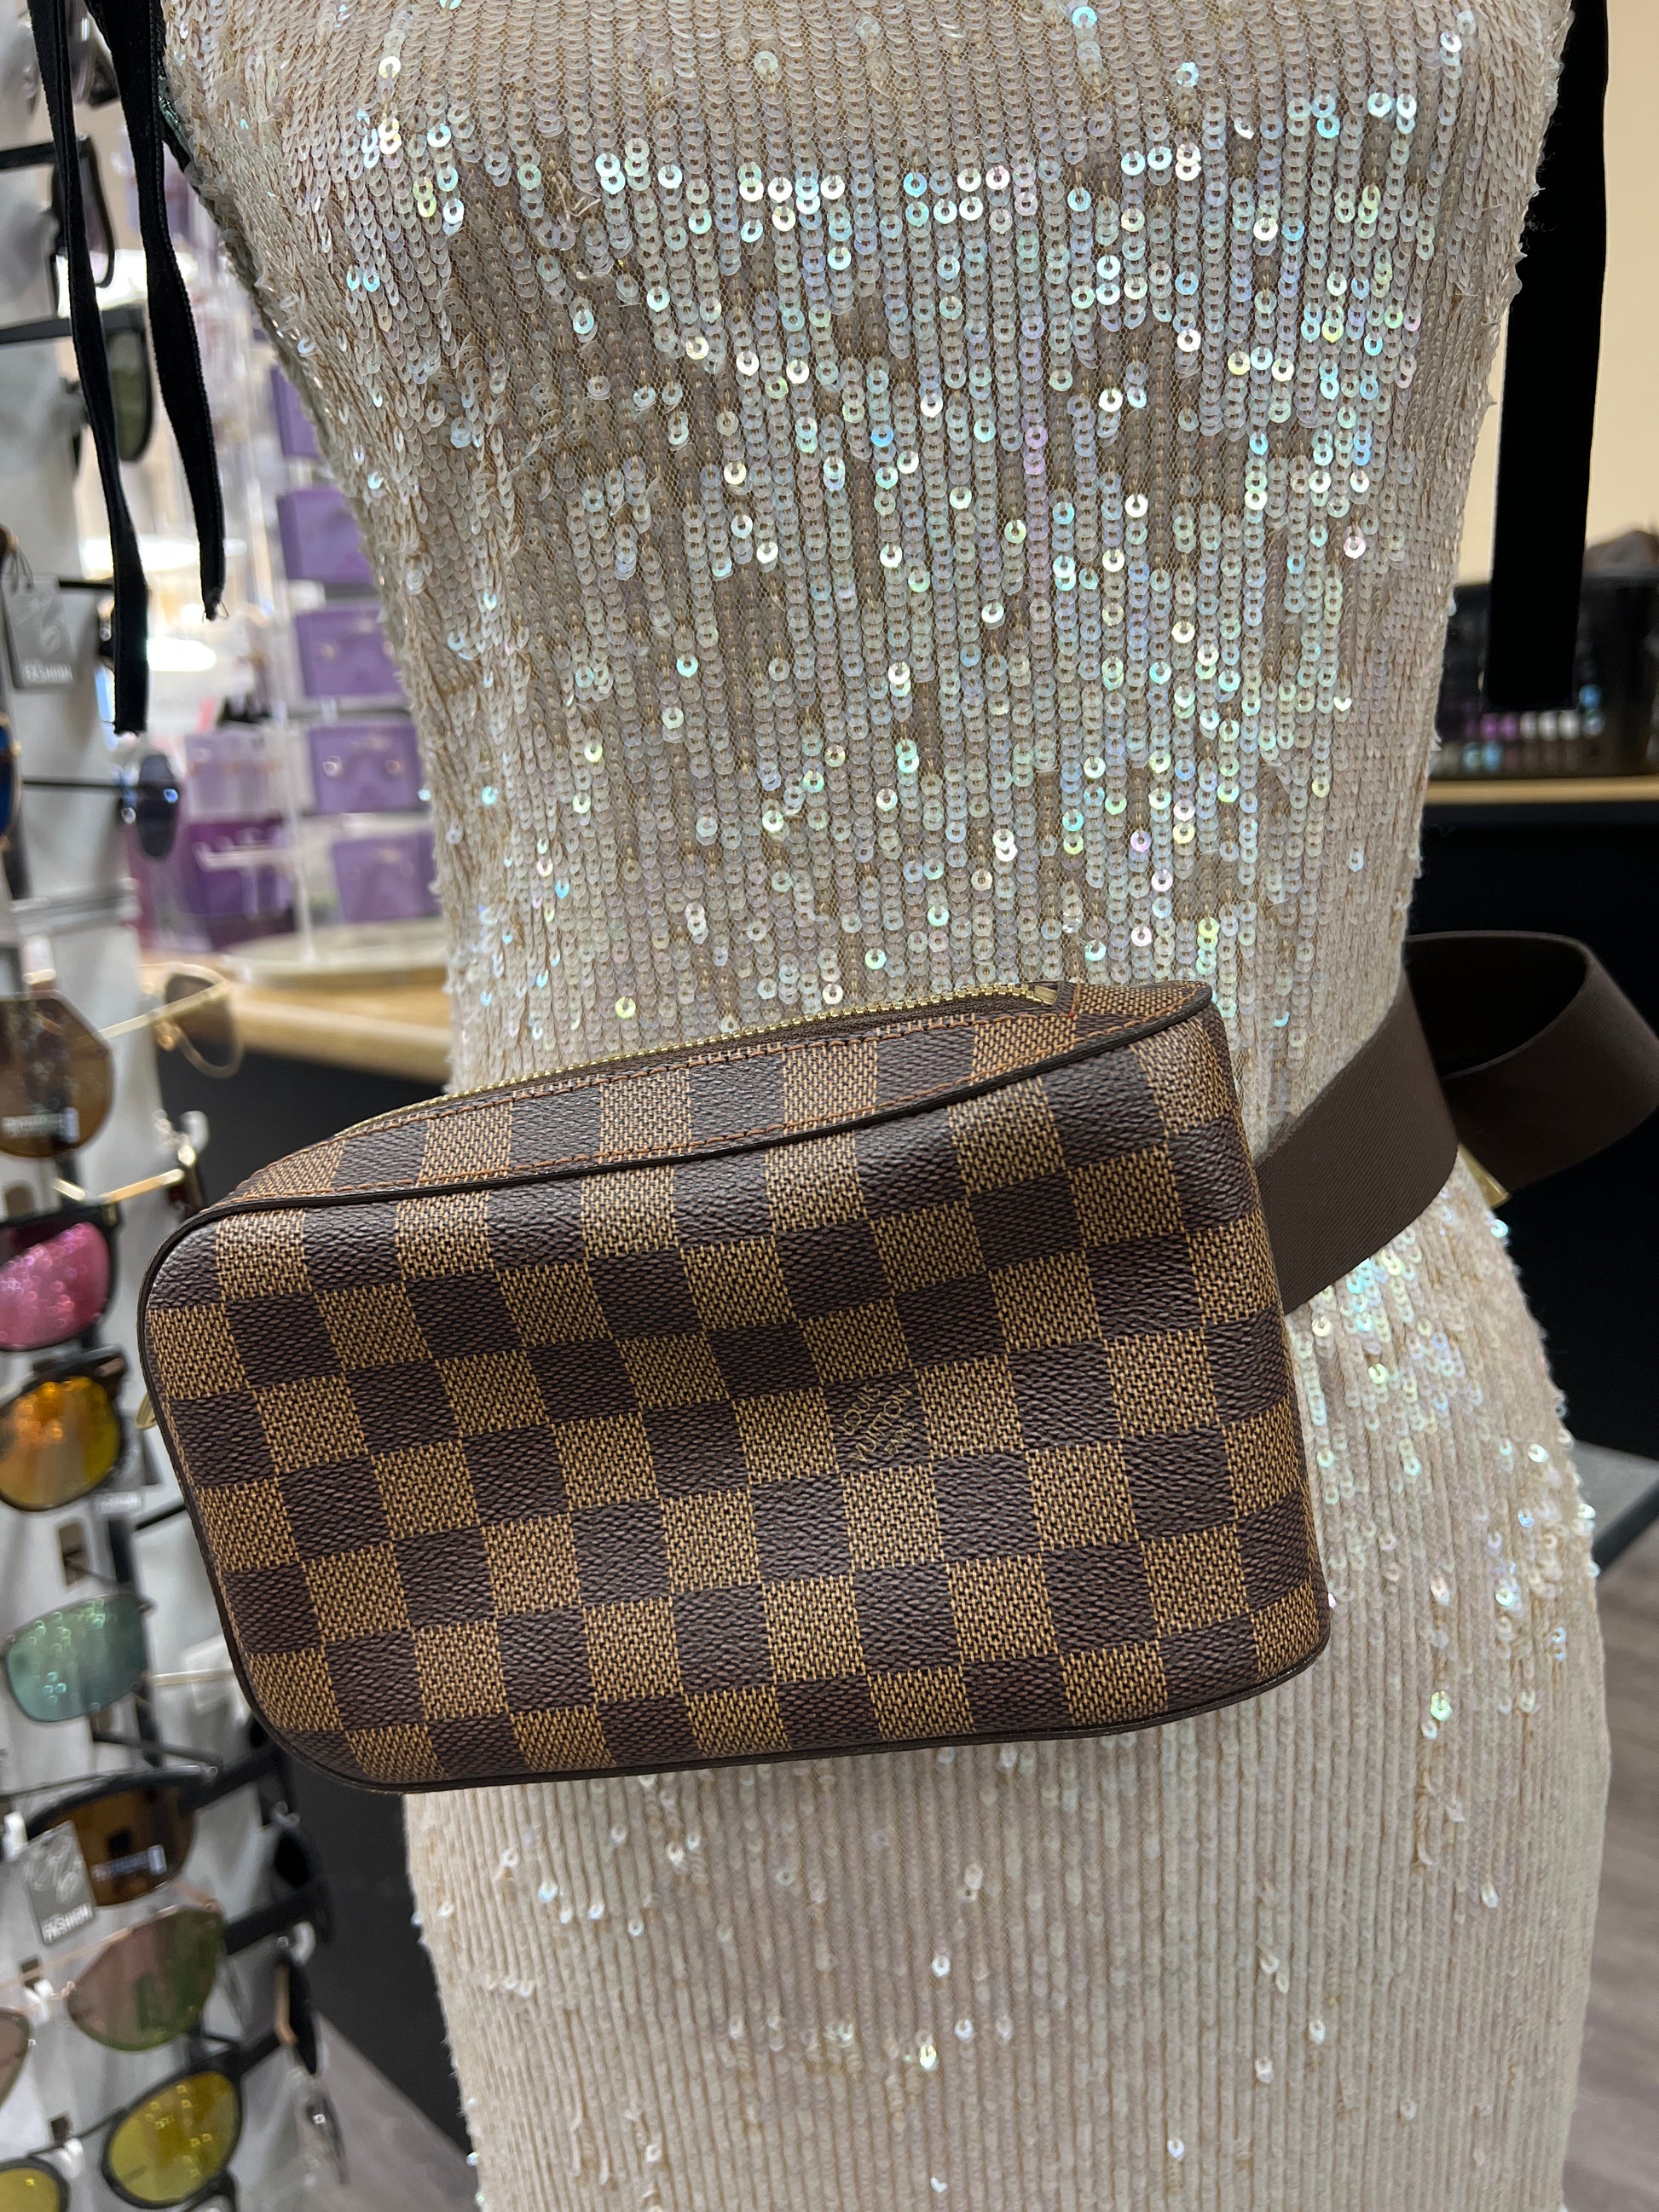 Designer Belt Bag Louis Vuitton Bag